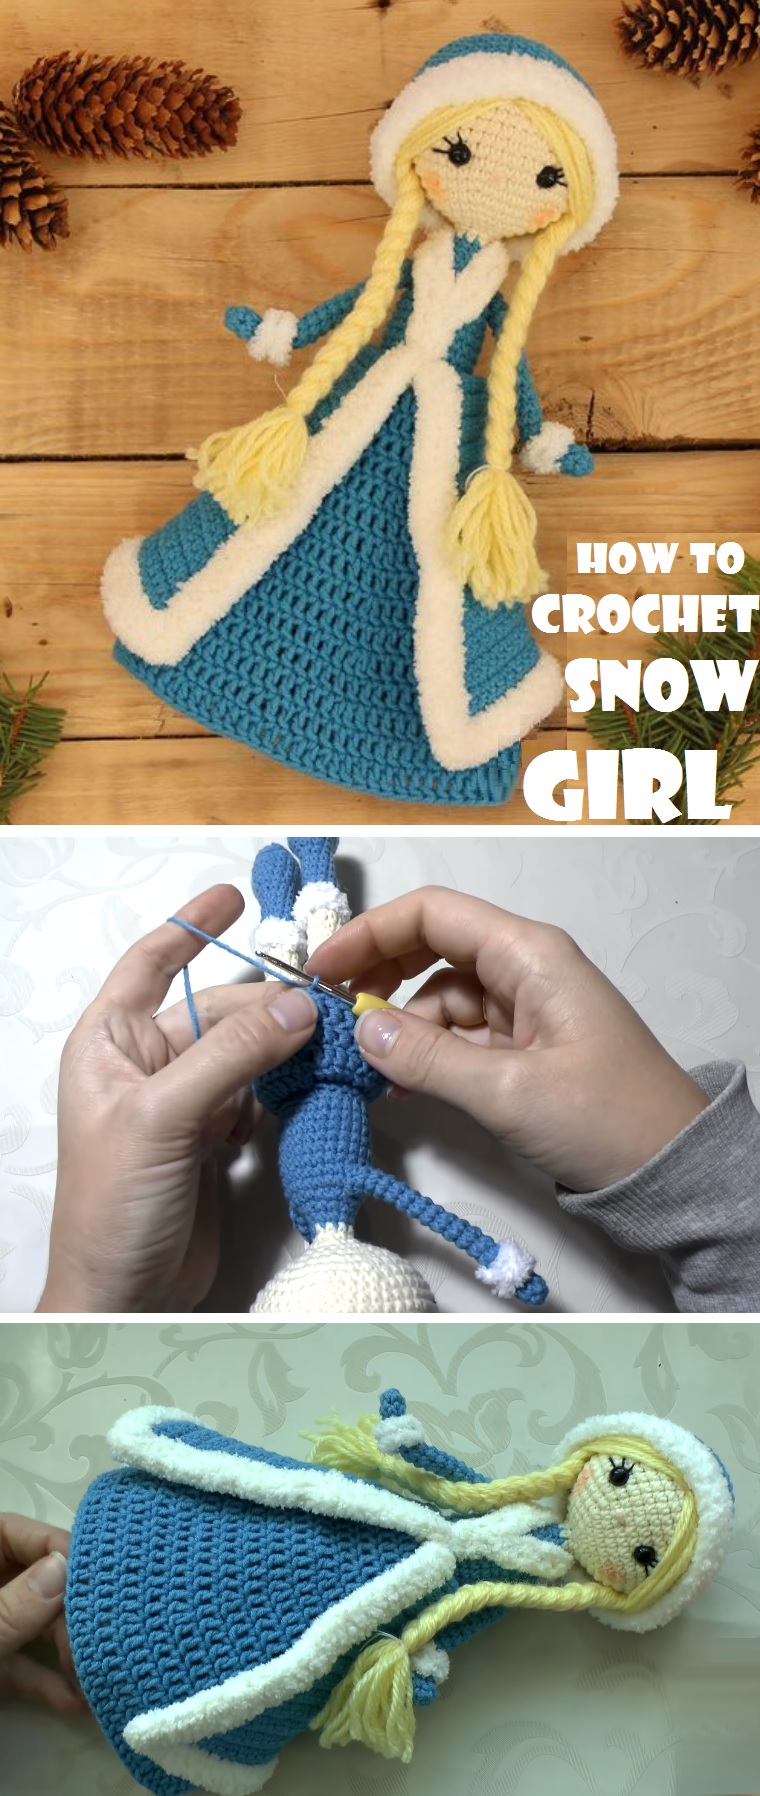 Crochet a Snow Girl